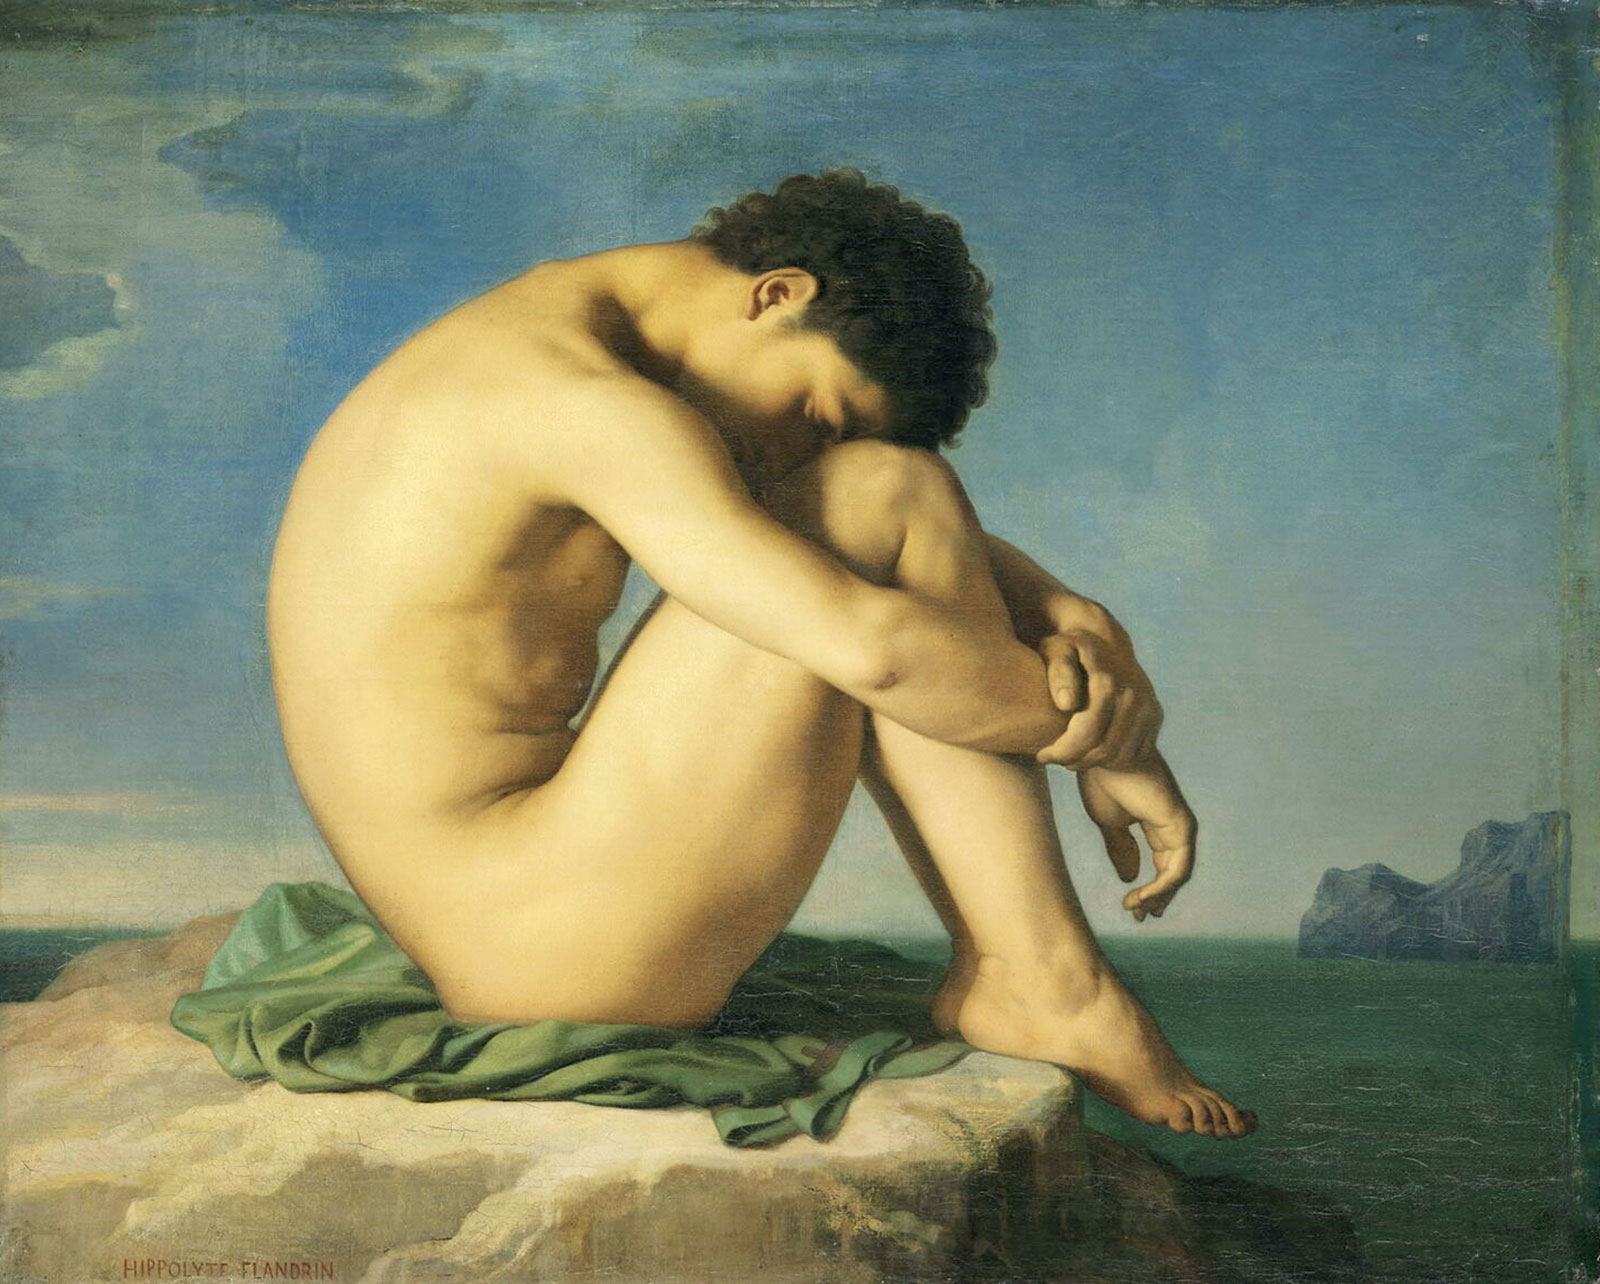 Hippolyte Flandrin, *Estudio (Joven desnudo sentado al borde del mar)*, 1835-1836. Musée du Louvre